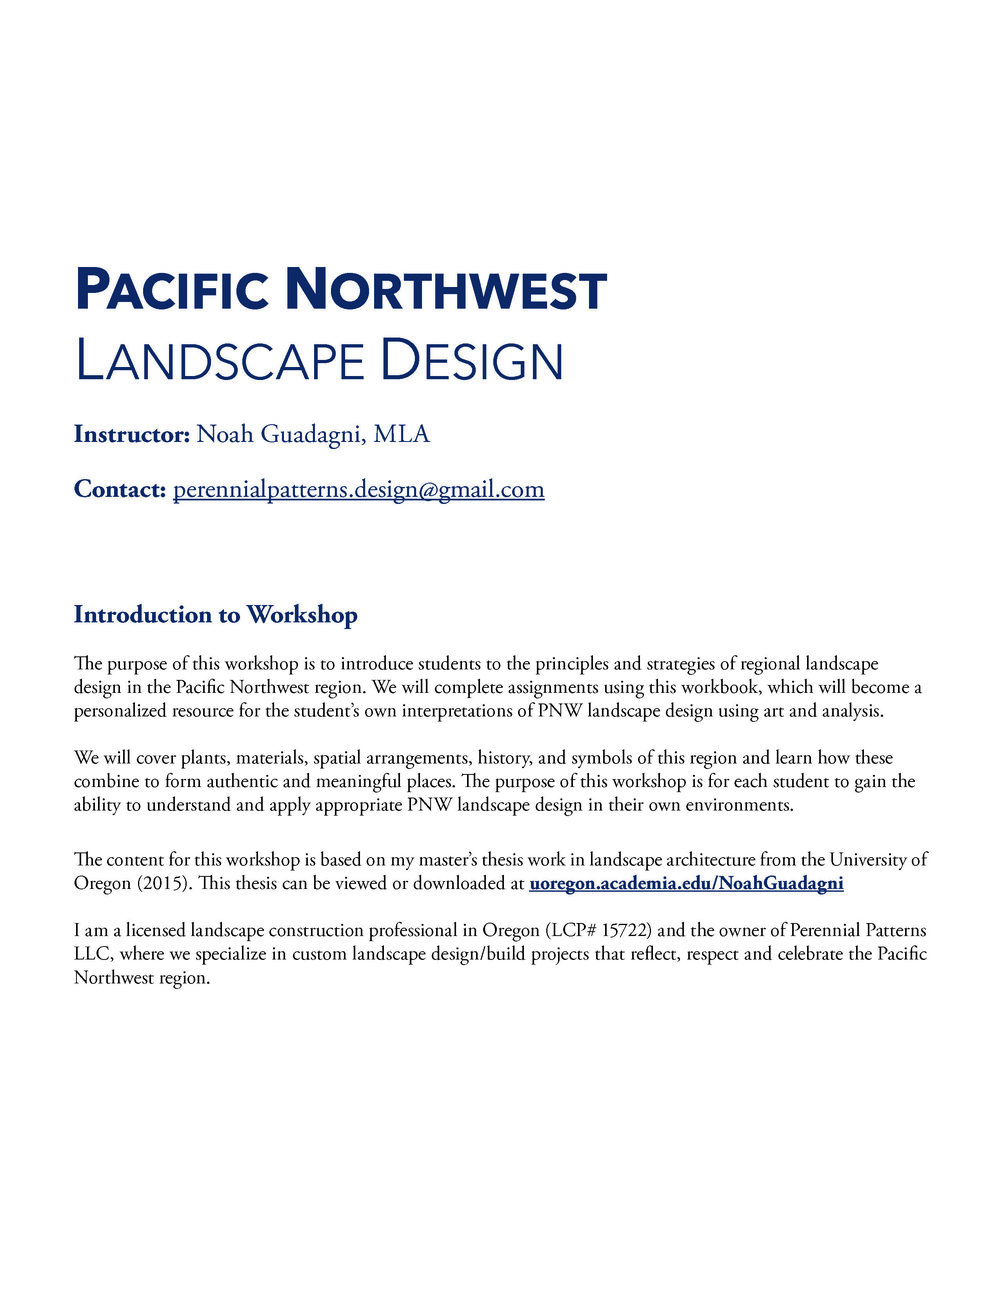 Landscape Design Course 12 Ceu, Oregon Landscape Contractors Board Continuing Education